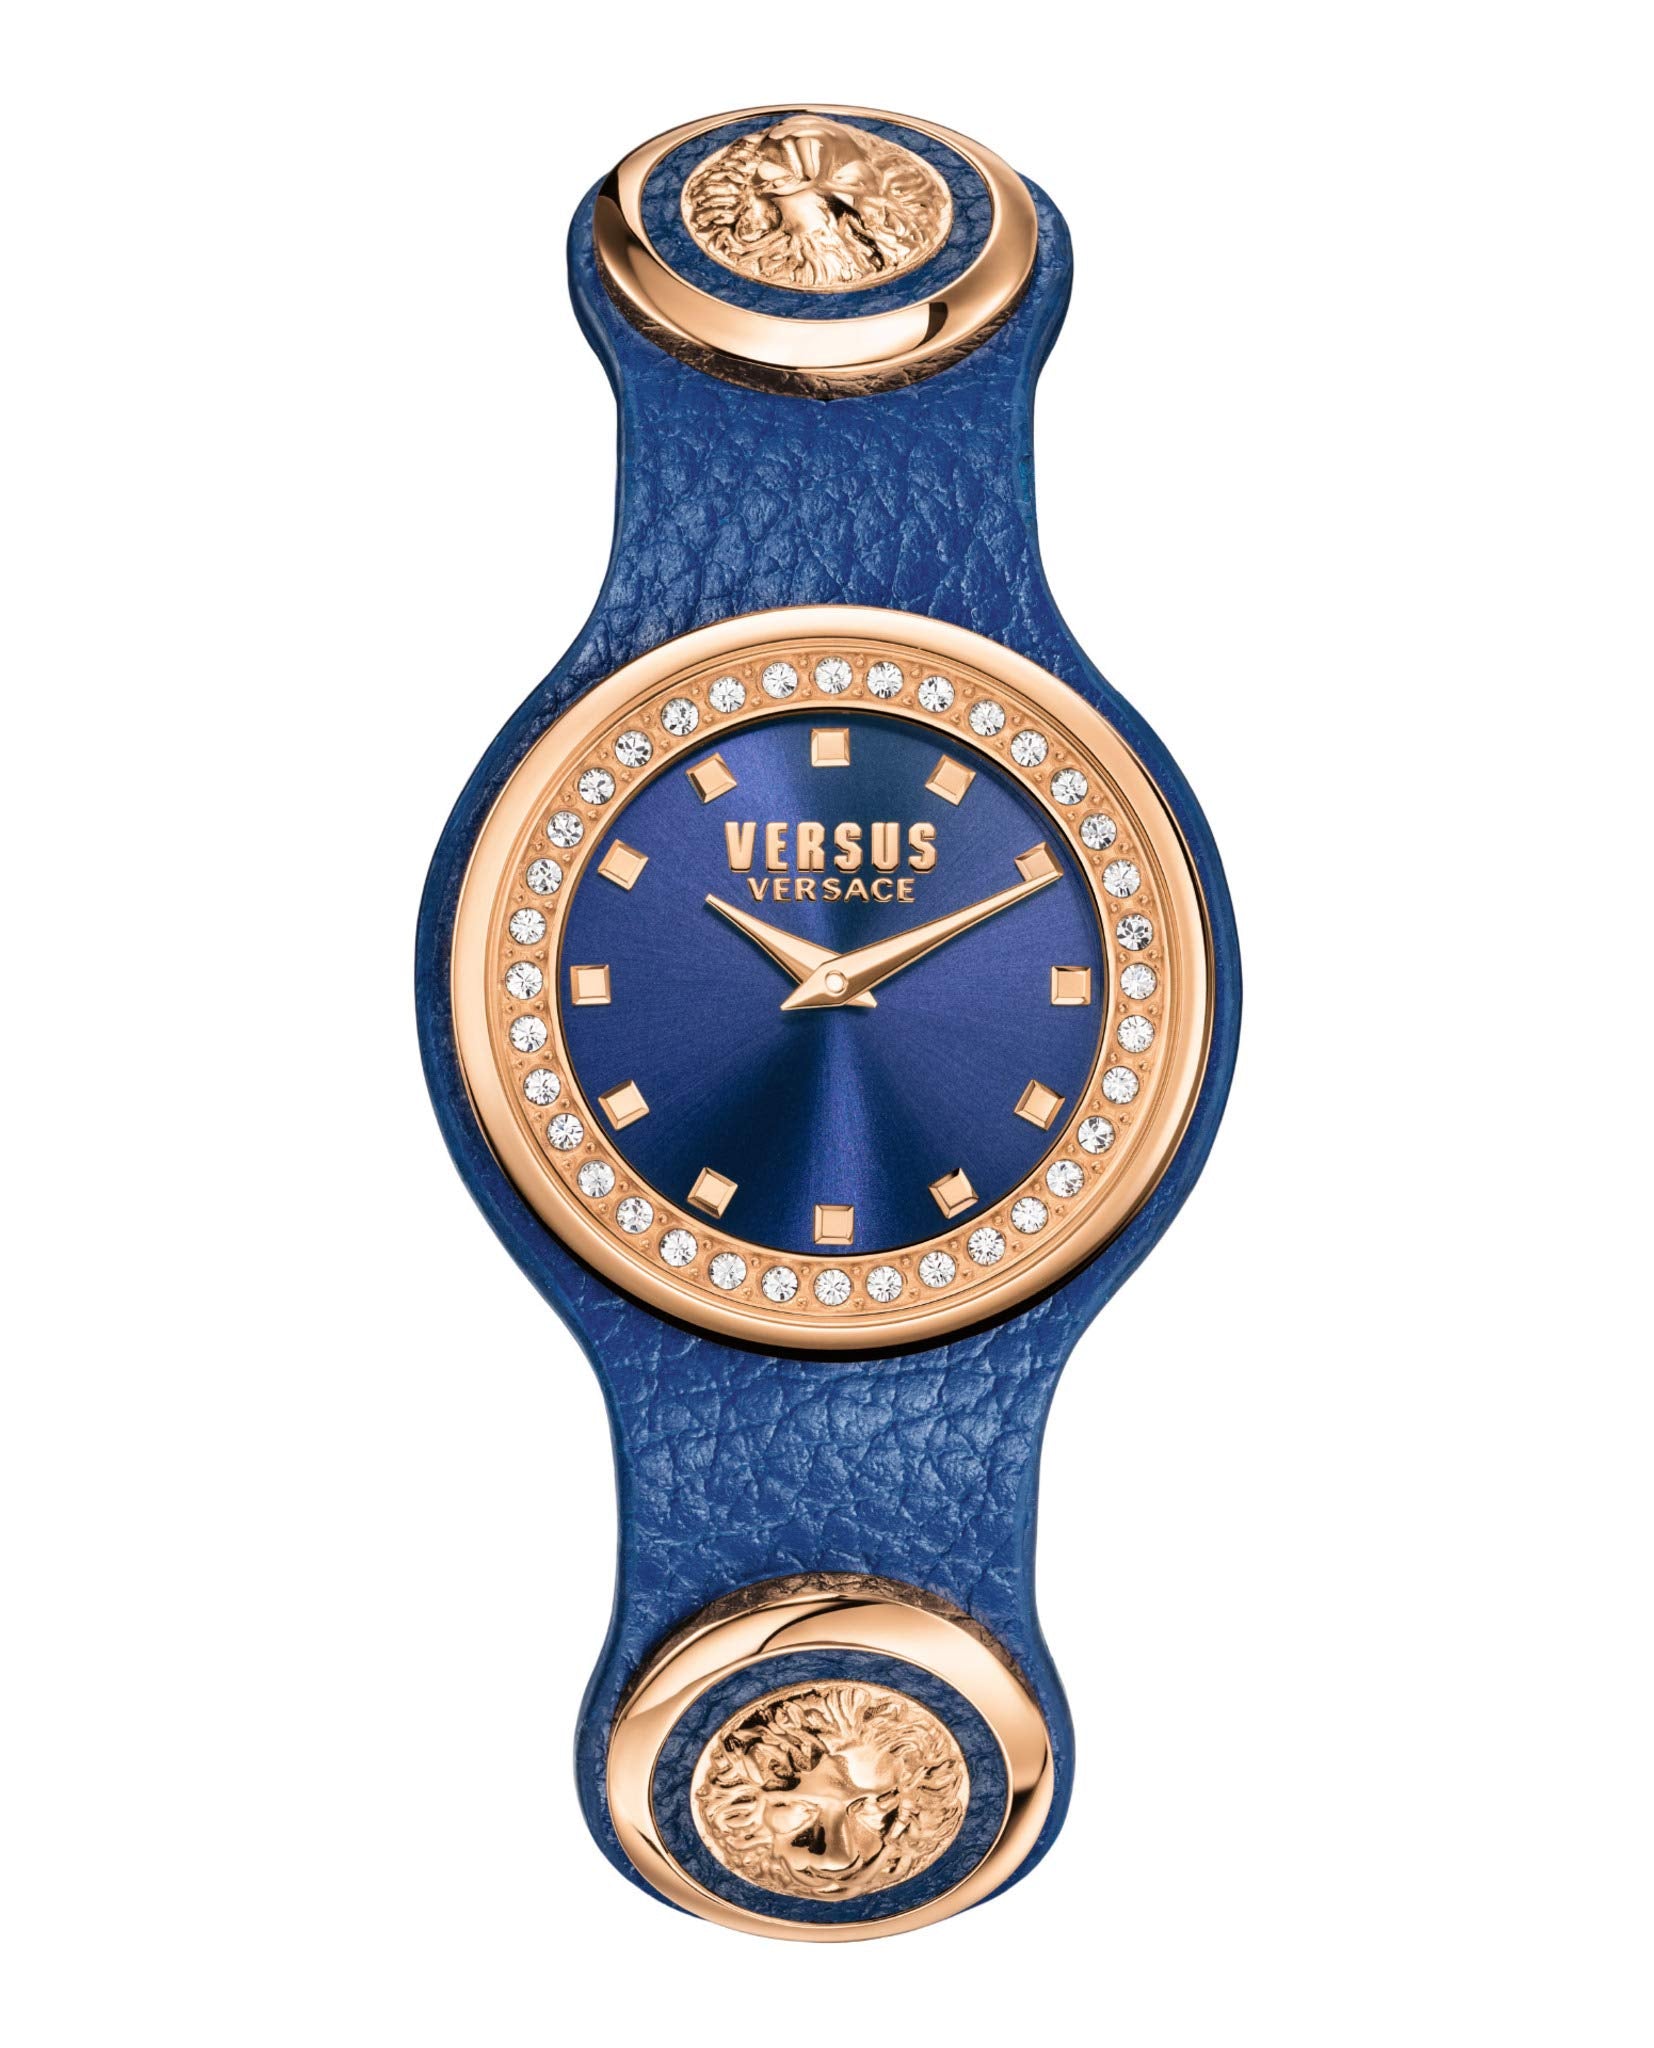 Versus Versace Carnaby Street Watch